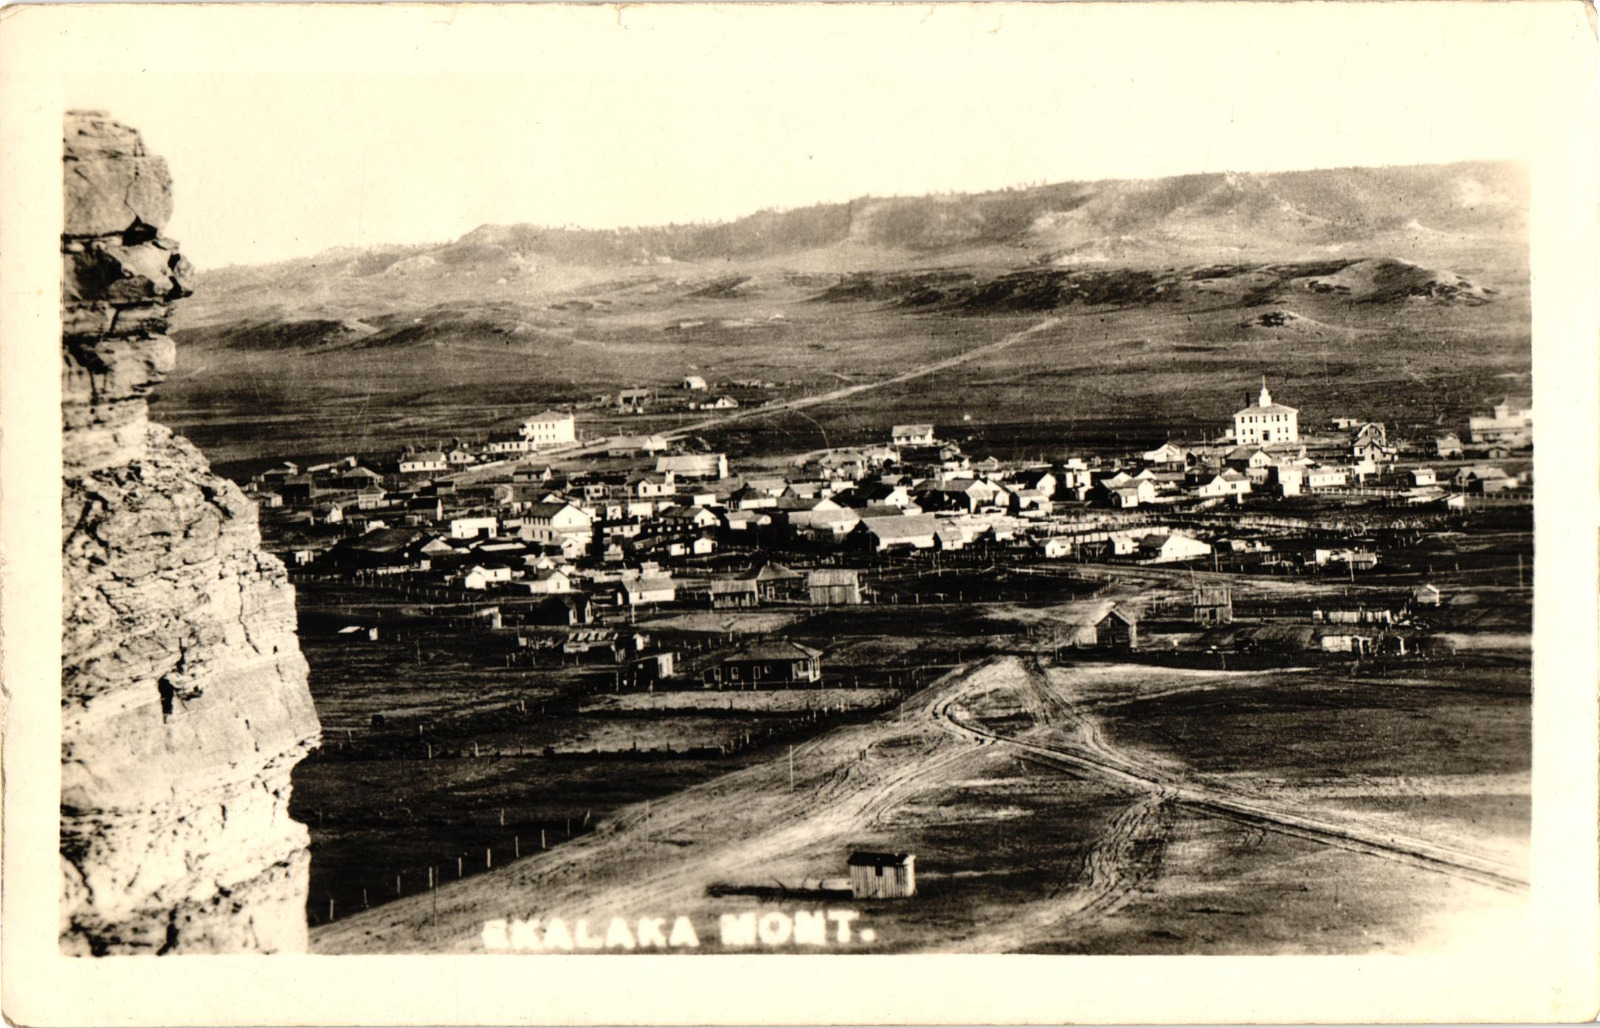 1920'S EKALAKA, MONTANA - REAL PHOTO TOWN OVERVIEW - VINTAGE POSTCARD